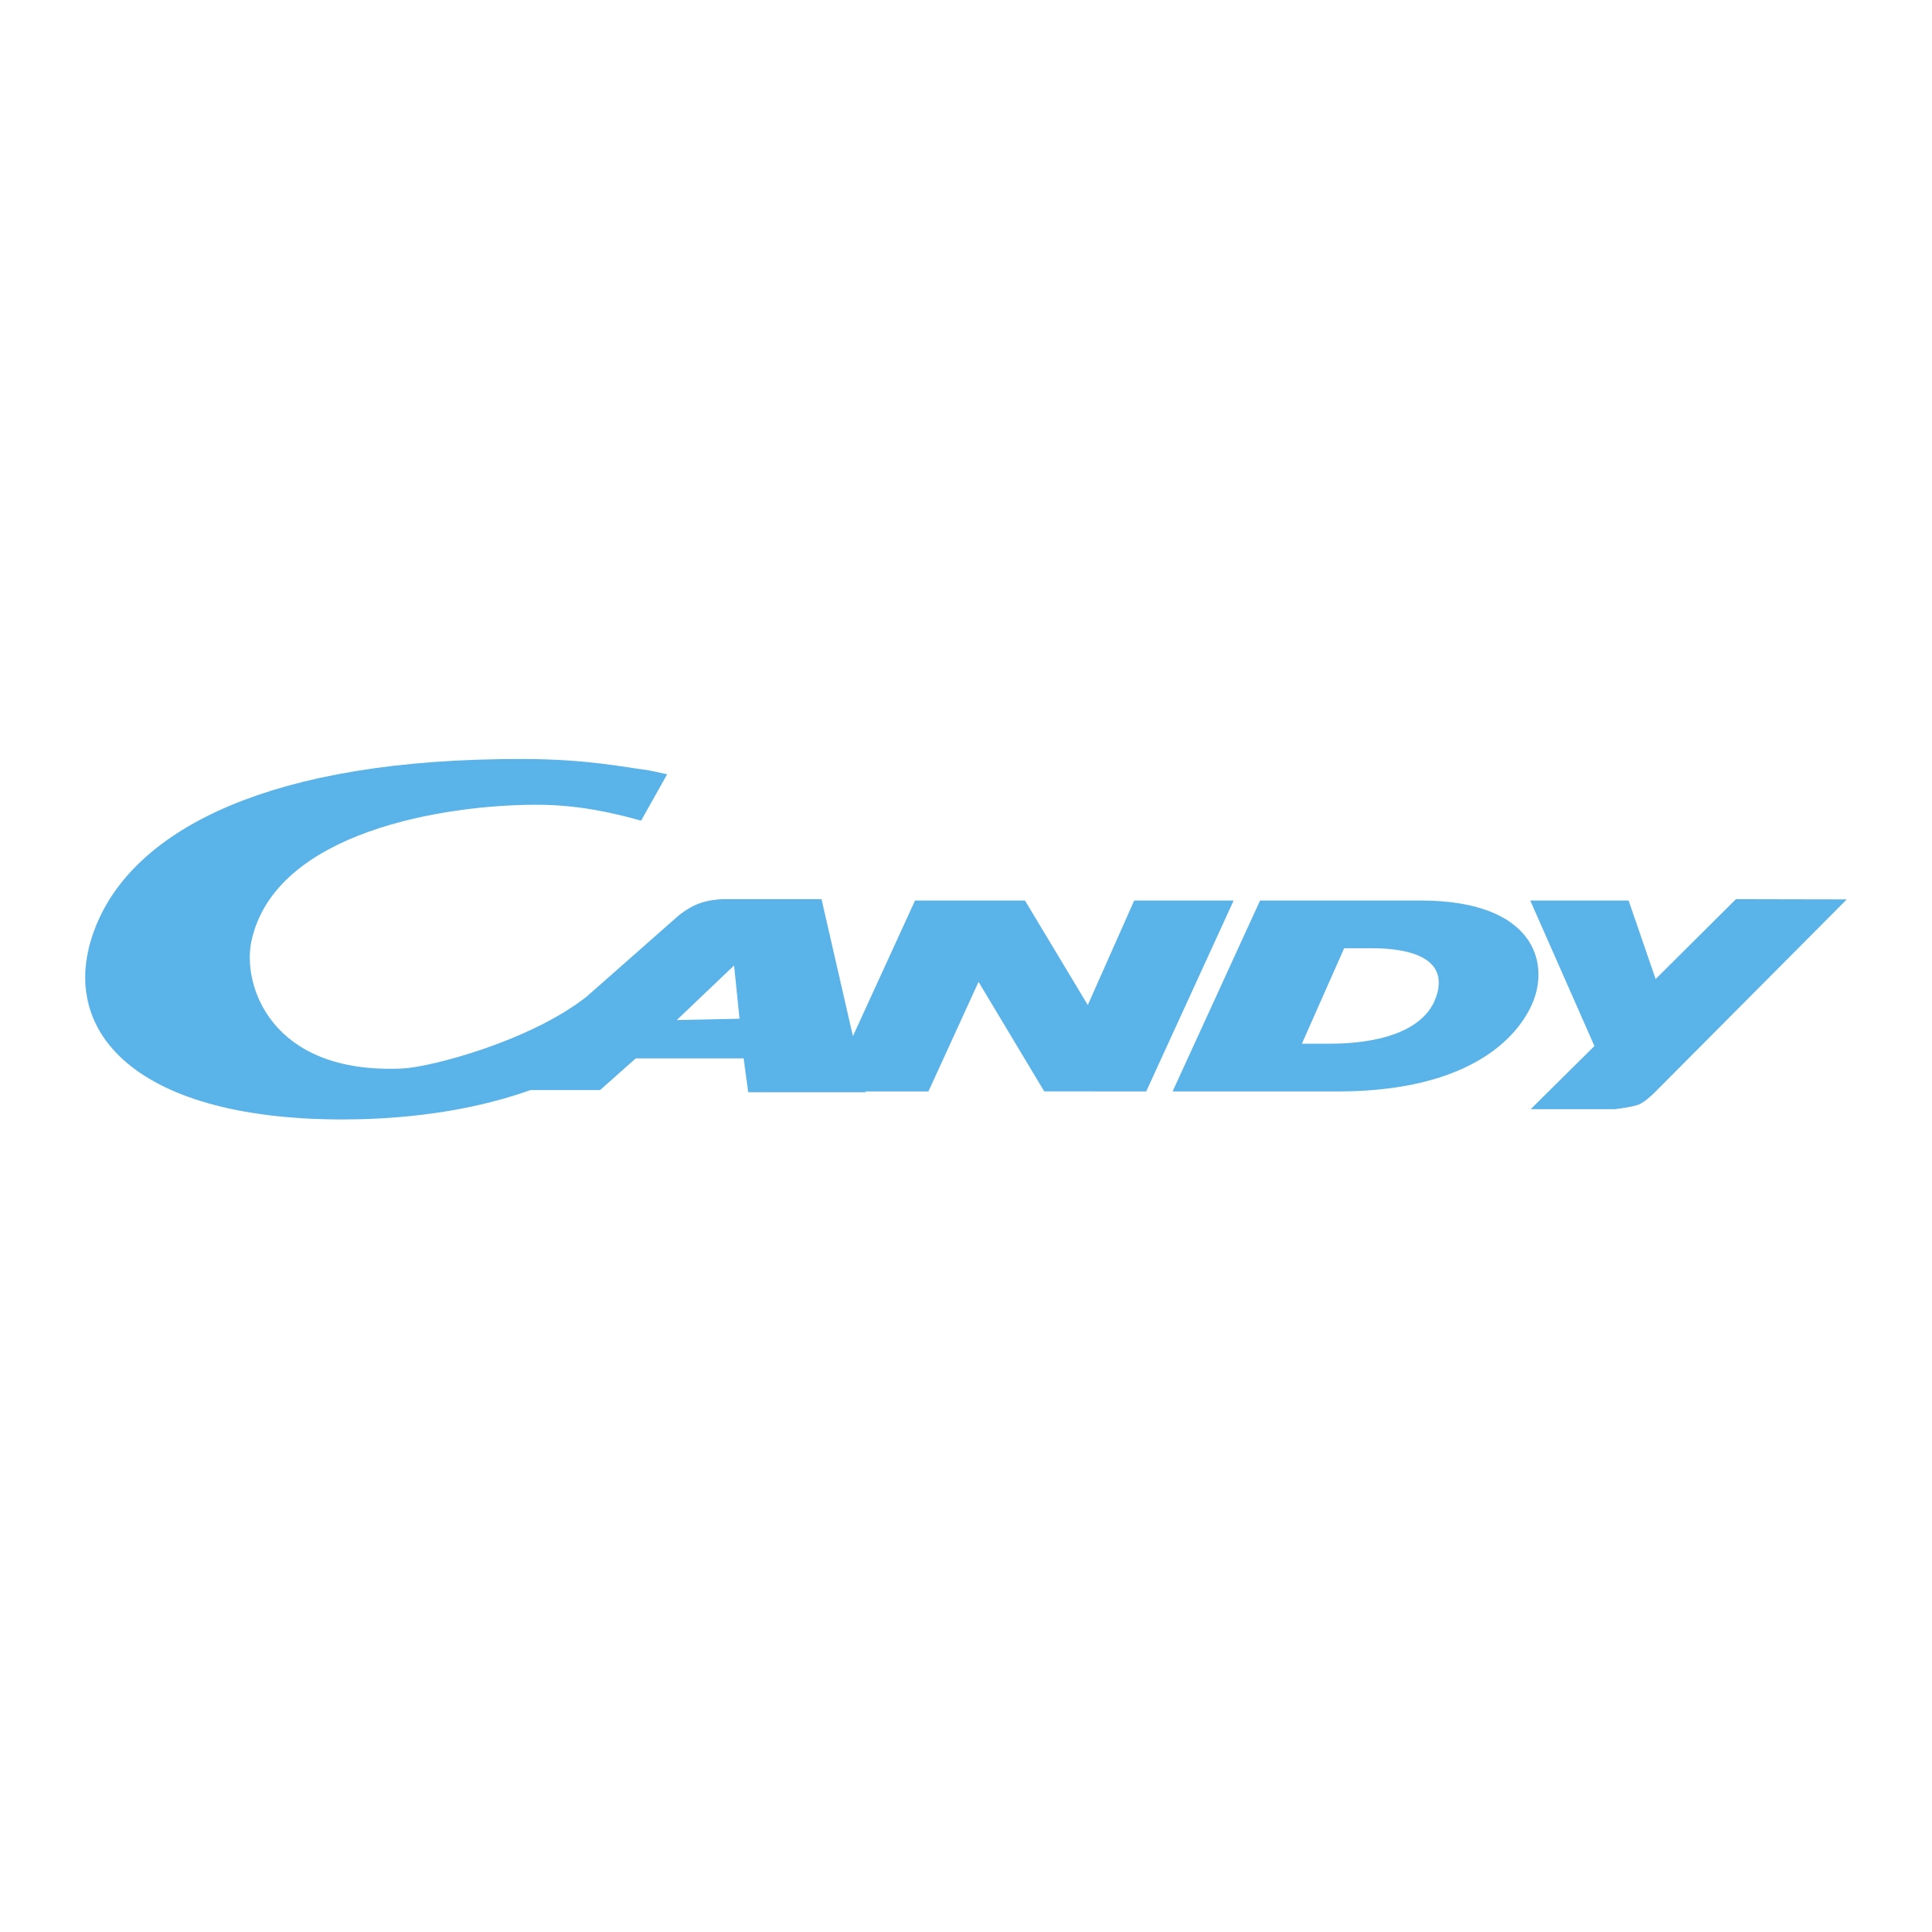 Candy logo